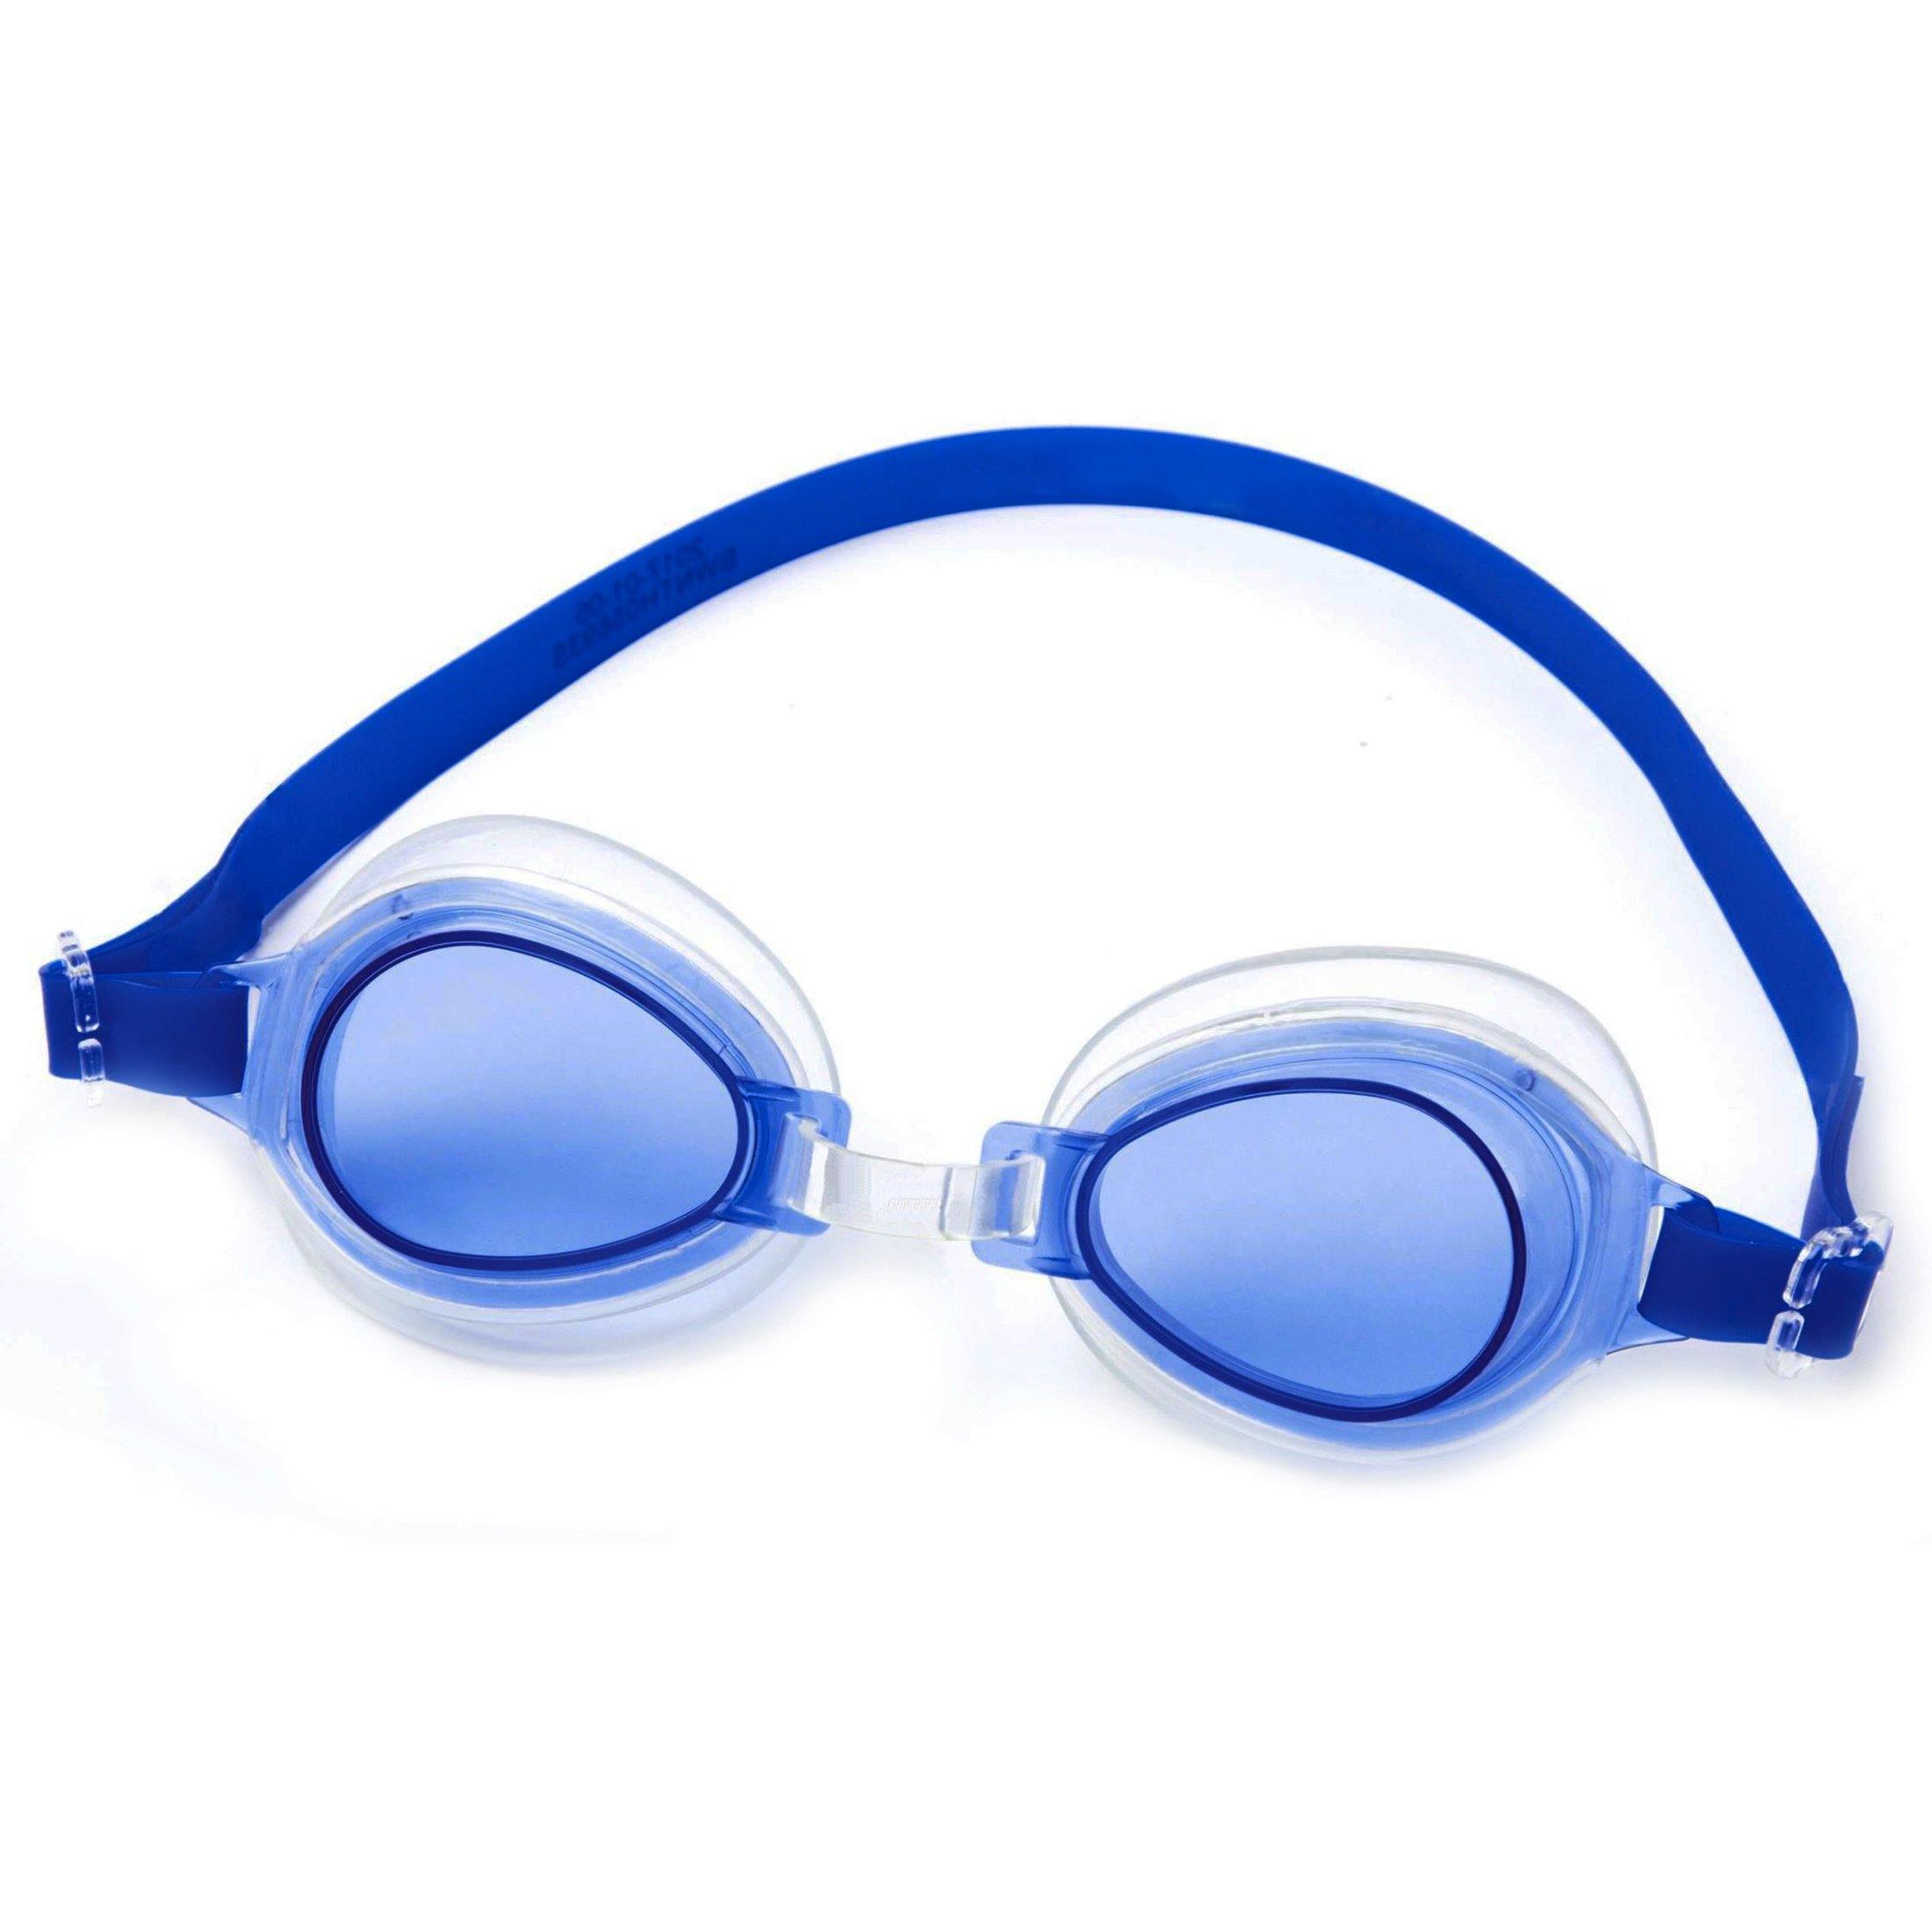 Bestway Hydro Lil Lightning Swimmer Swim Goggles for Kids 3+